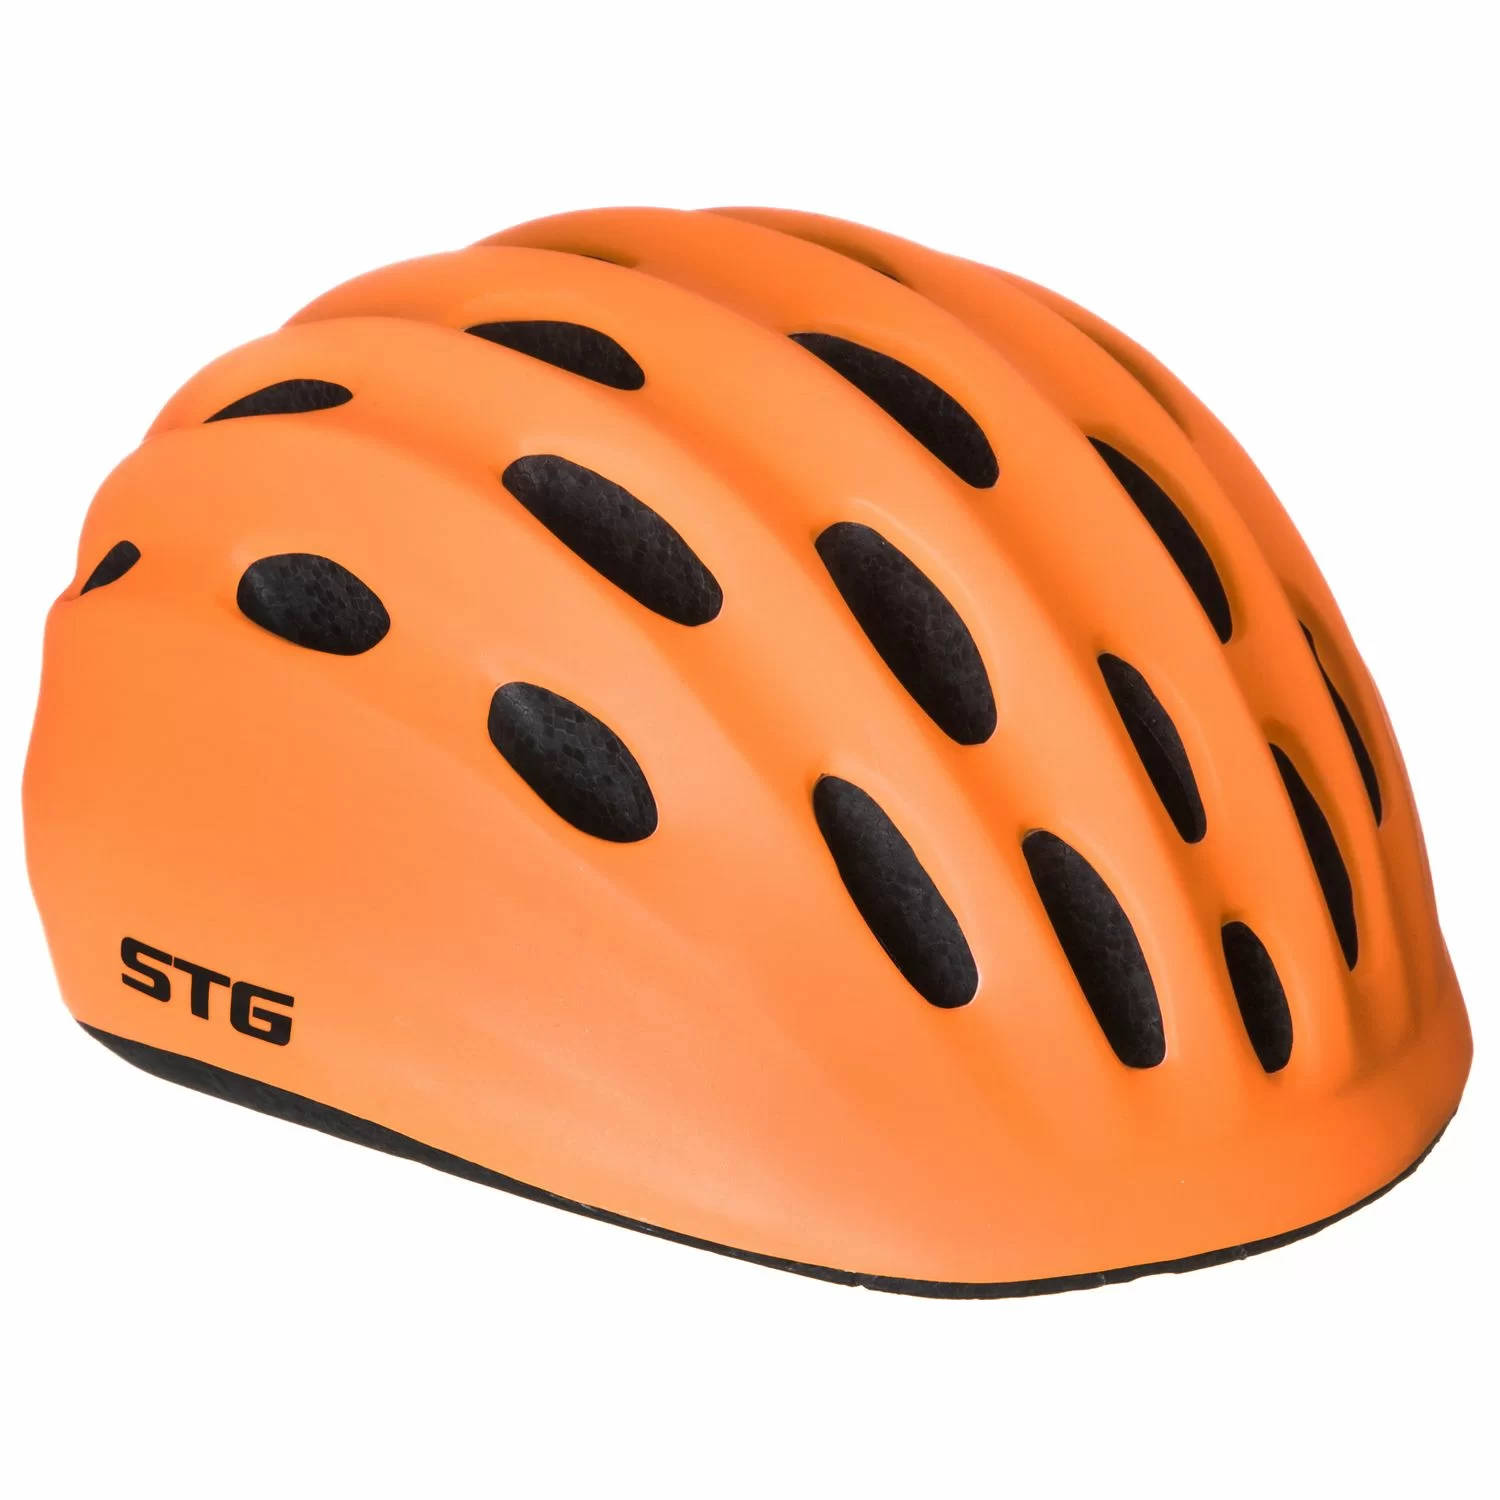 Реальное фото Шлем STG HB10-6 с фикс застежкой оранж Х98559 от магазина СпортСЕ